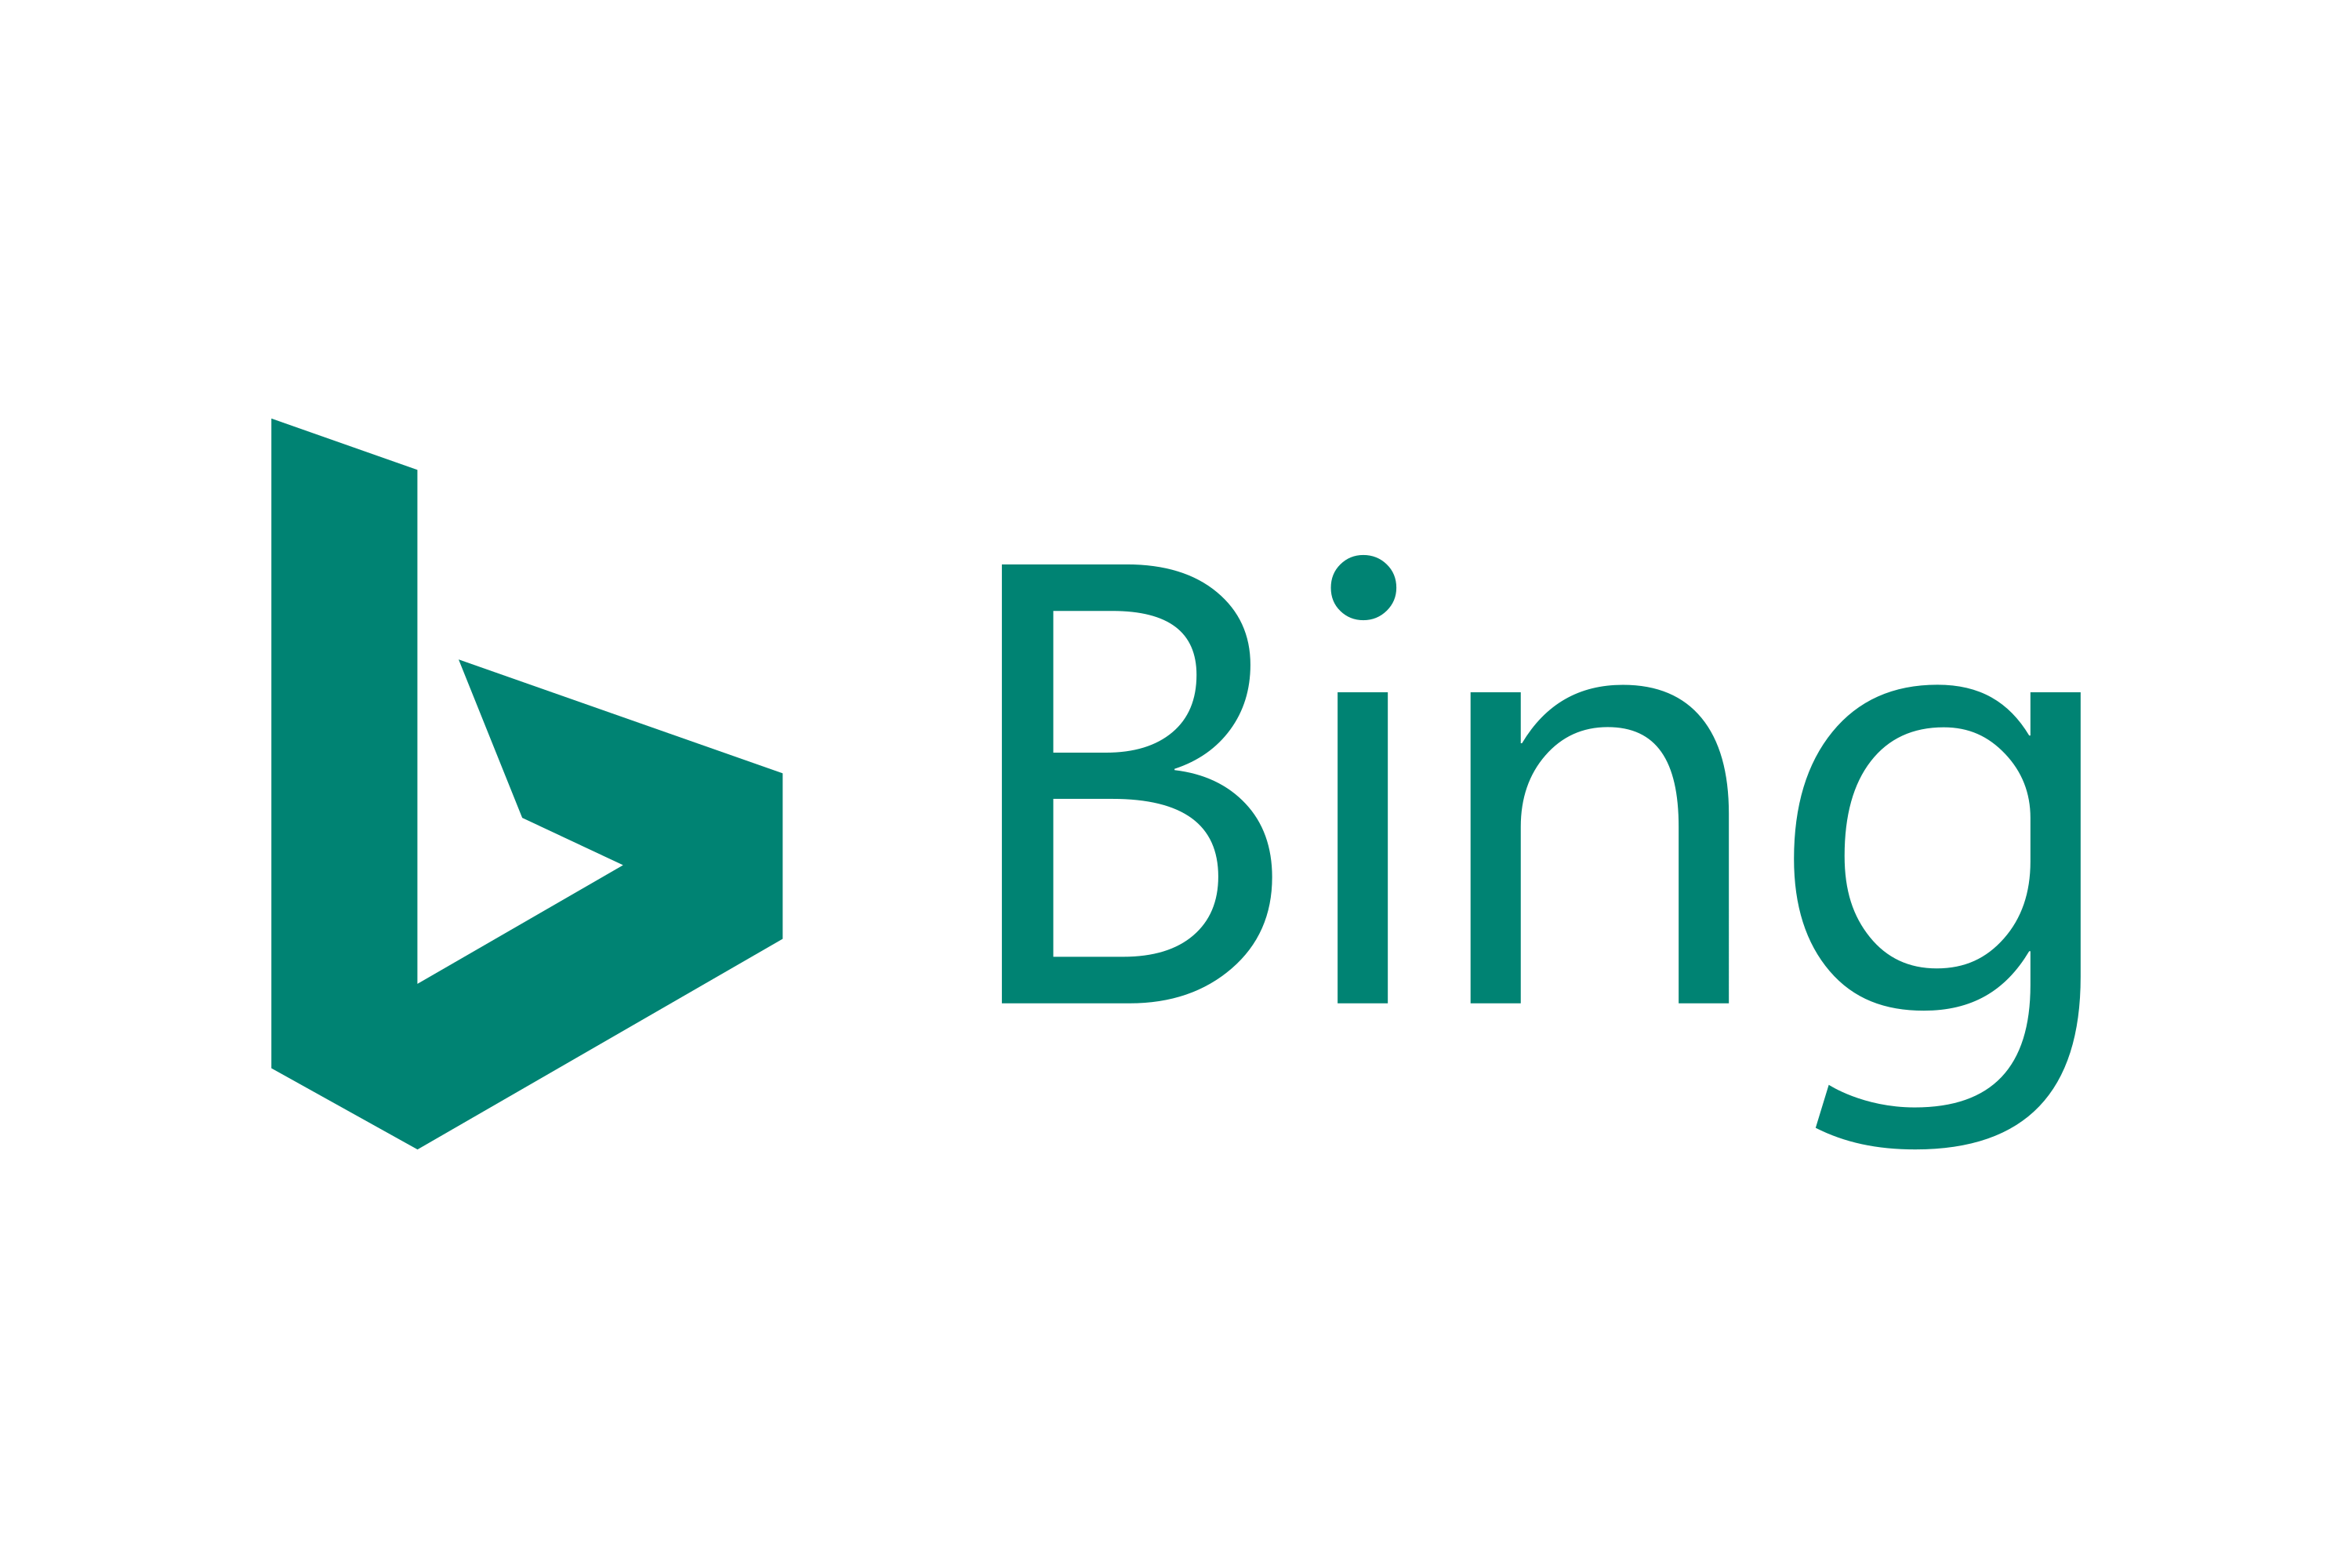 Bing imagine. Bing Поисковая система. Значок Bing. Майкрософт бинг логотип. Значок бинг Поисковая система.